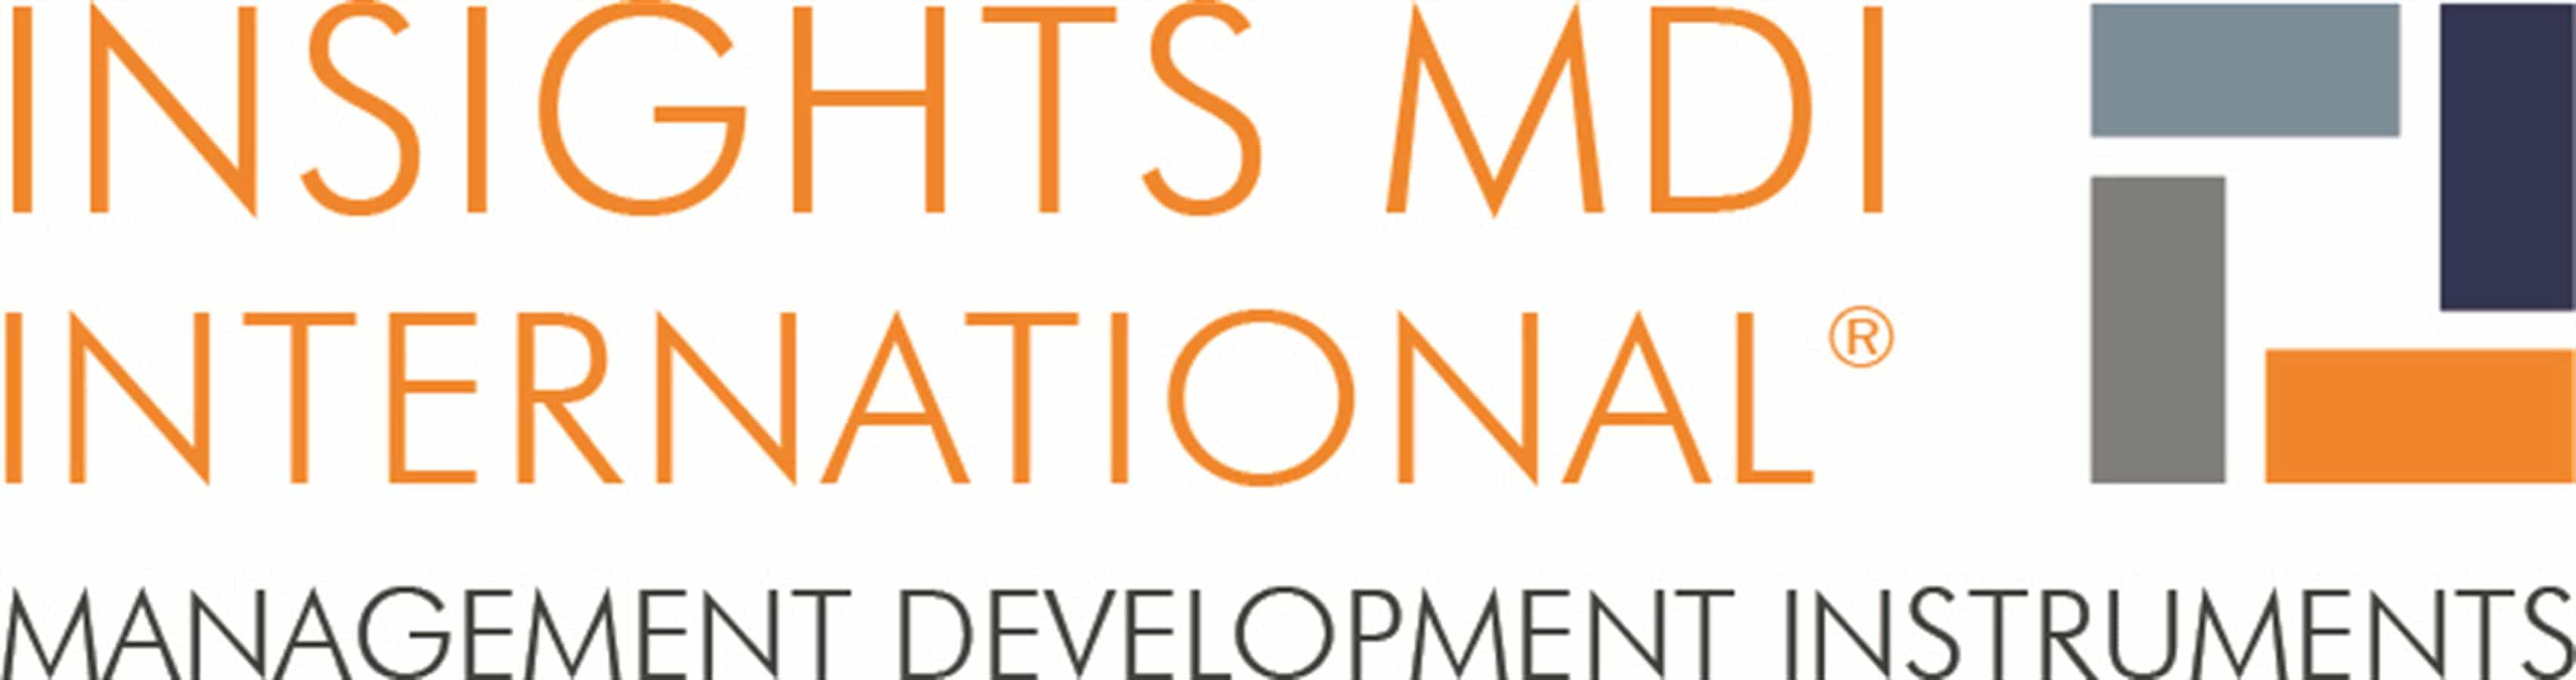 Insights MDI International Logo